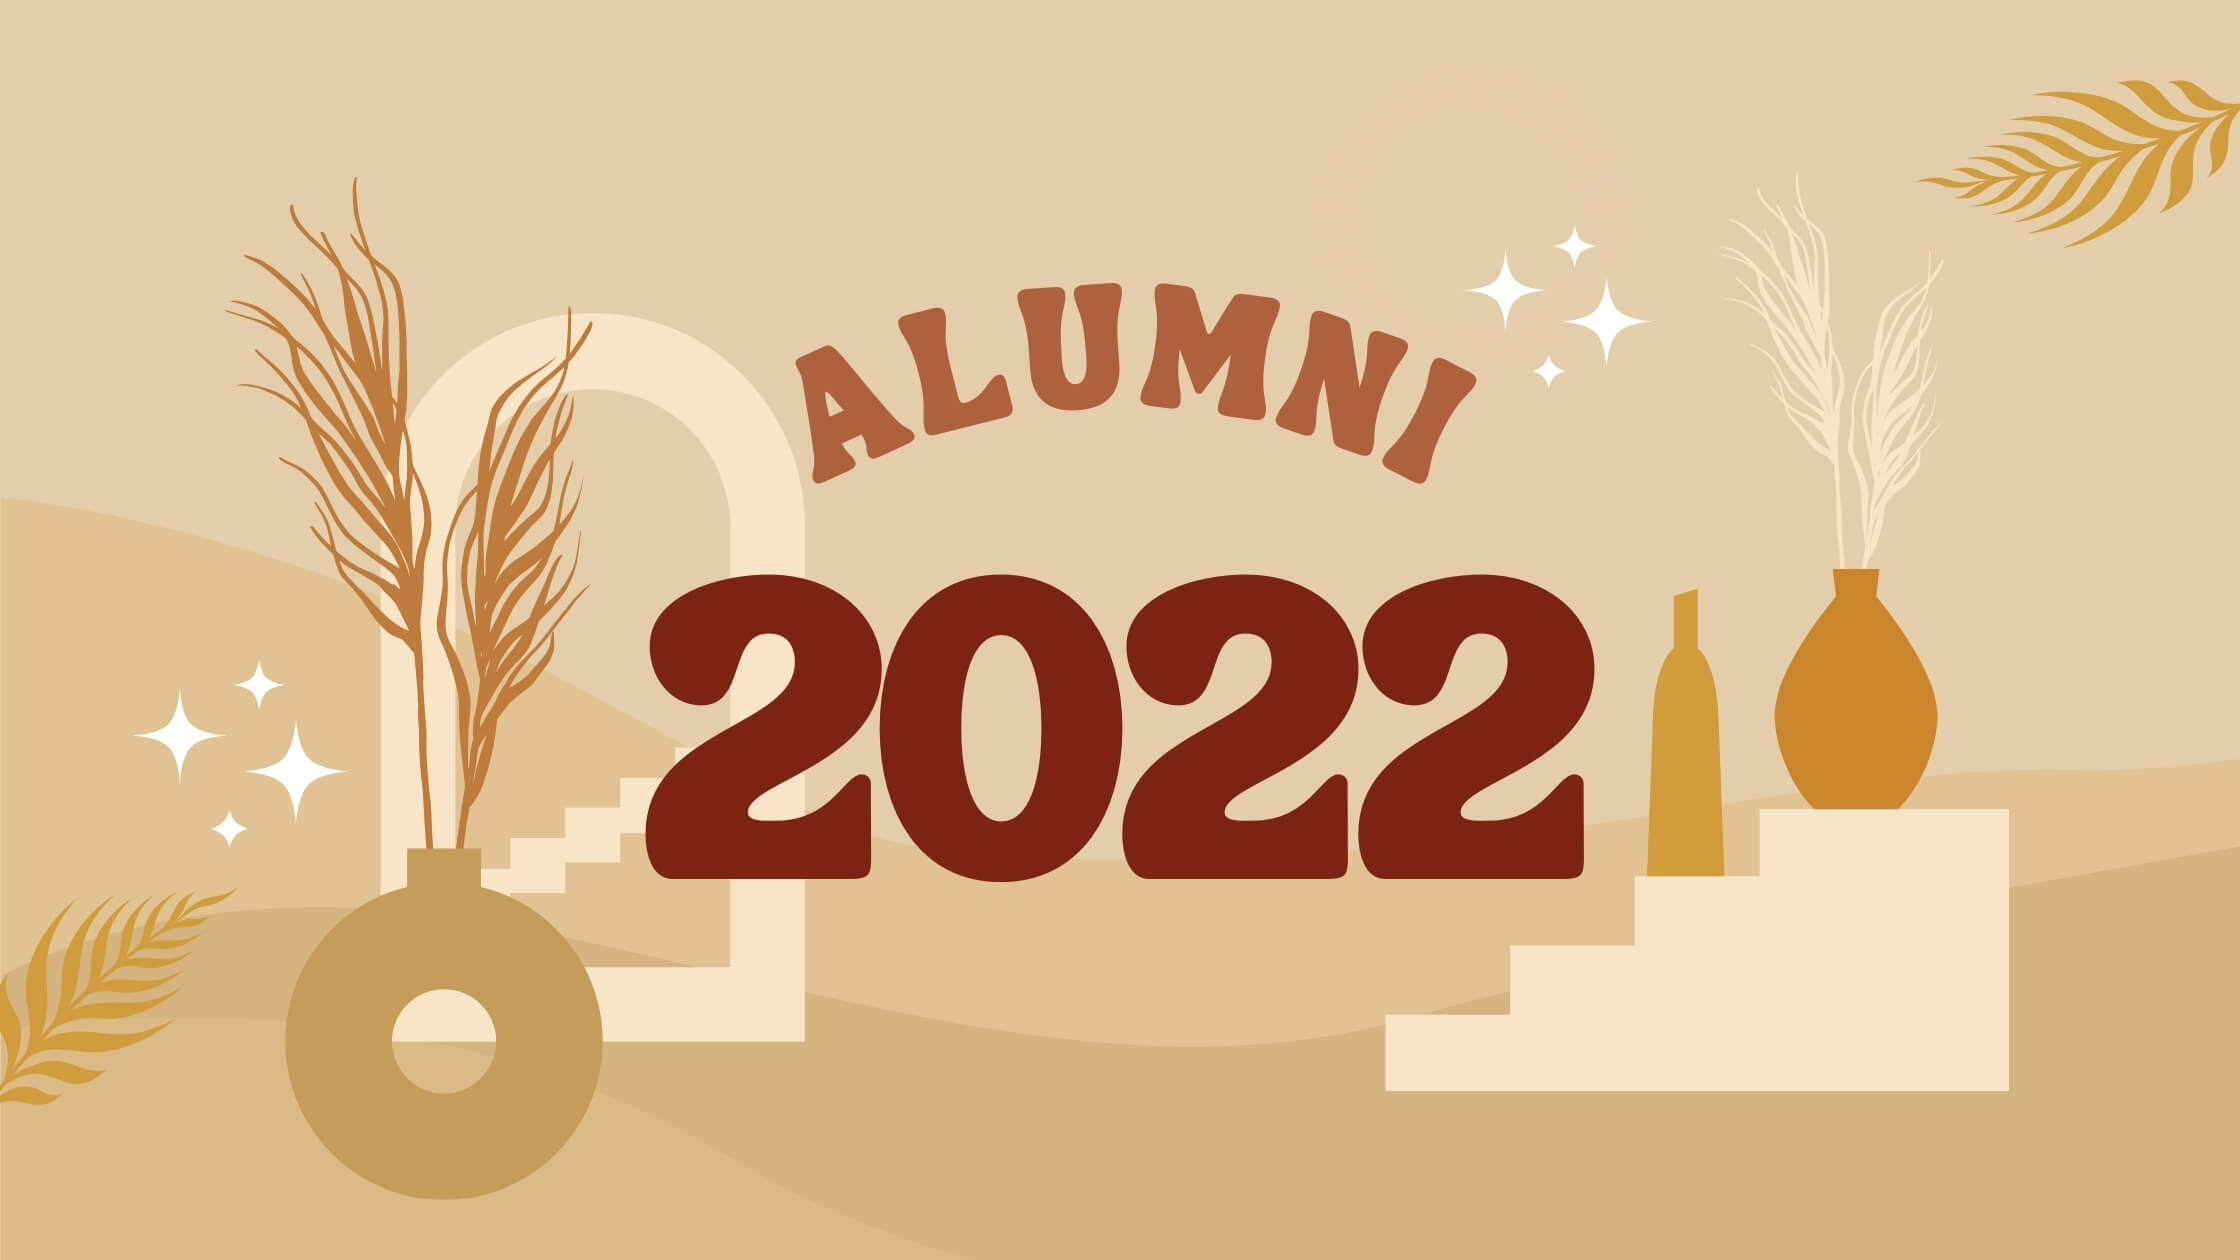 Alumni 2022